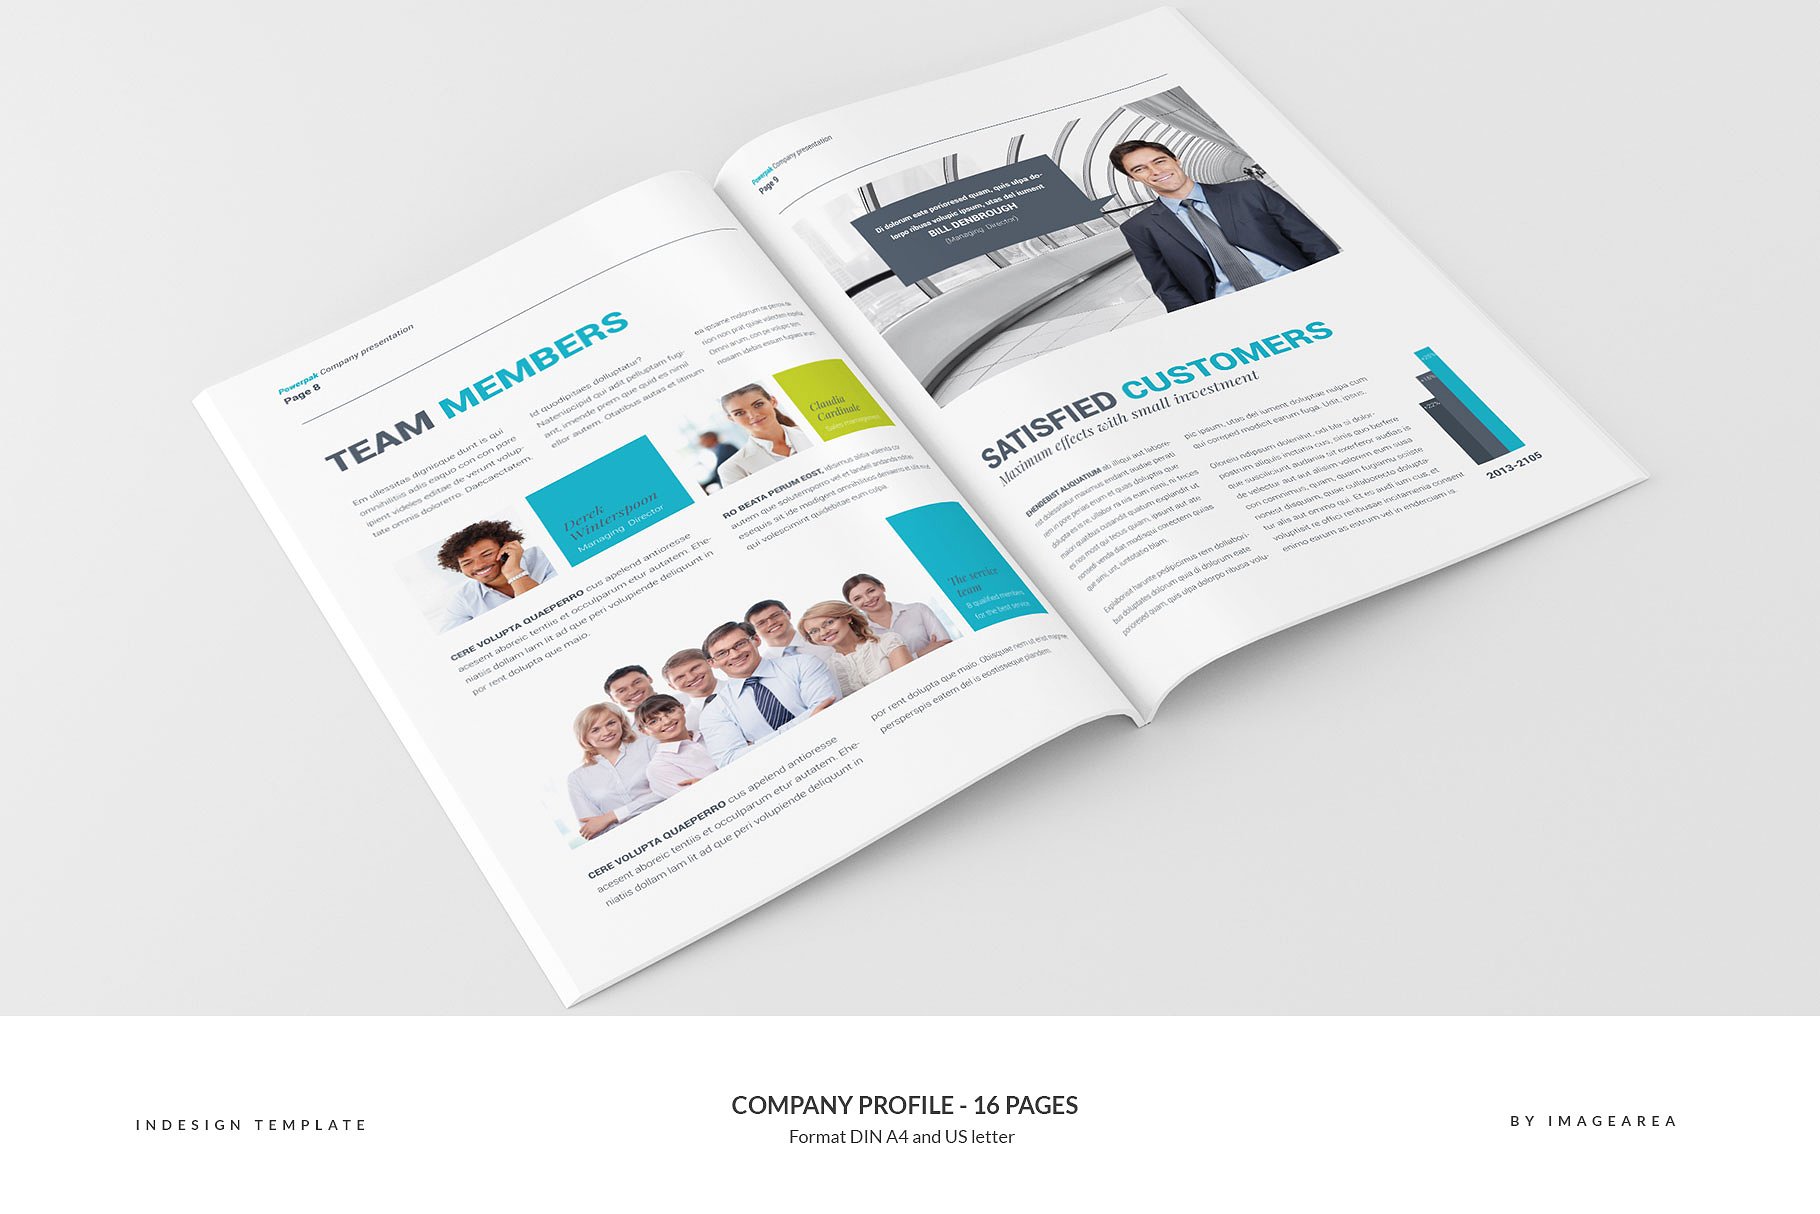 企业宣传画册设计模板 Company Profile – 16 Pages插图(5)